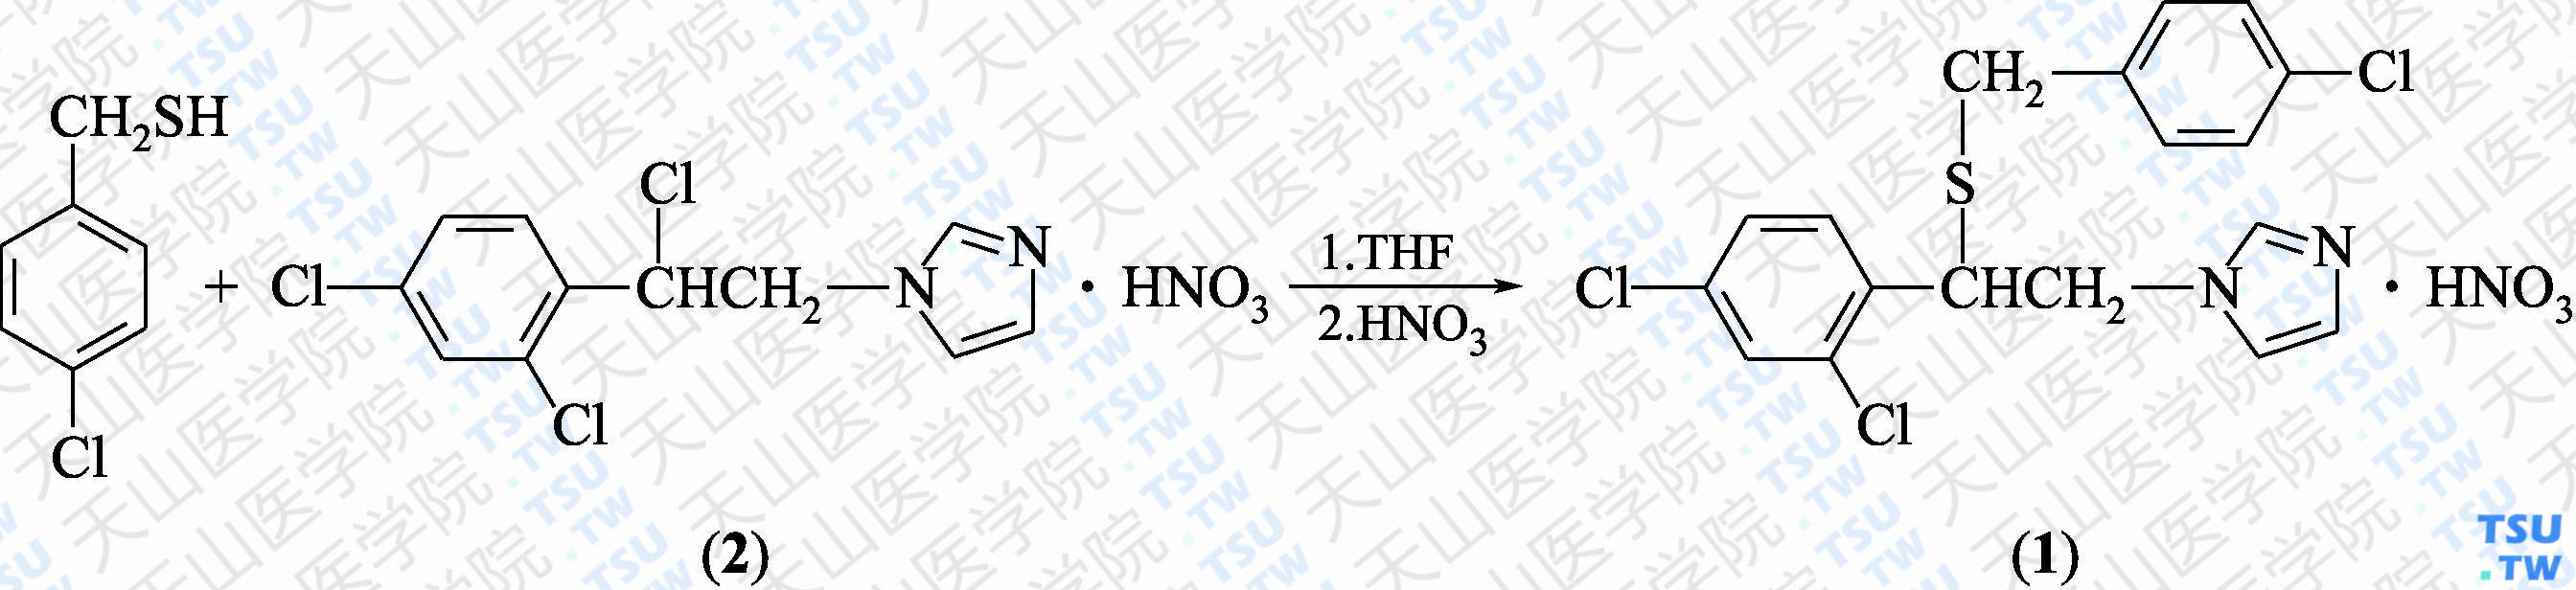 硝酸硫康唑（分子式：C<sub>18</sub>H<sub>15</sub>Cl<sub>3</sub>N<sub>2</sub>S·HNO<sub>3</sub>）的合成方法路线及其结构式